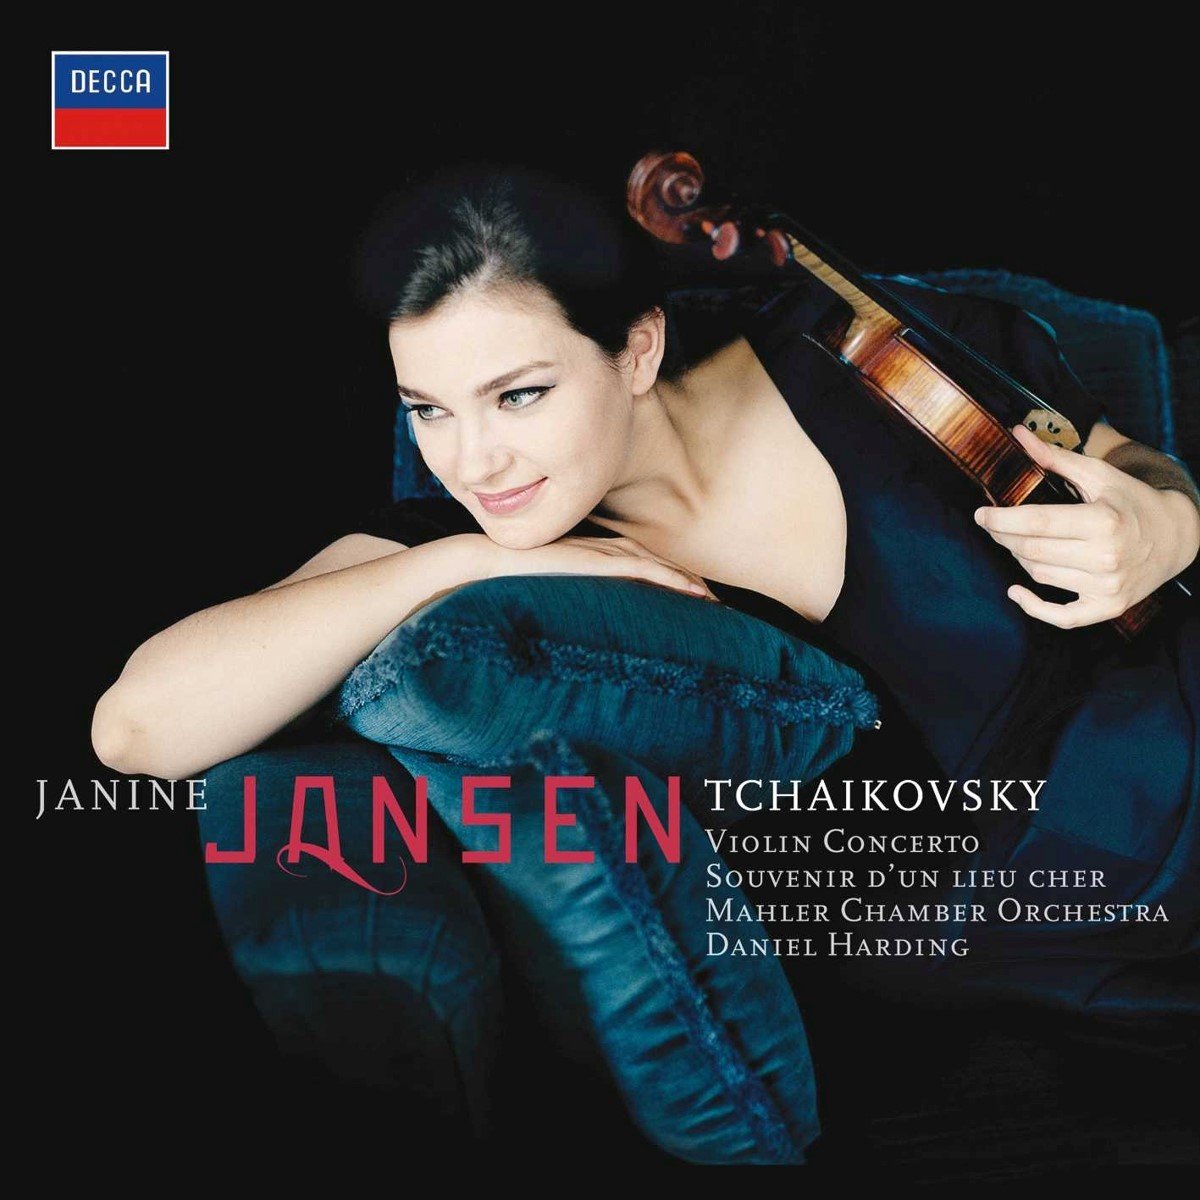 Mahler chamber orchestra. Janine Jansen Tchaikovsky. Янин Янсен скрипка. Янин Янсен дискография. Янин Янсен альбомы.